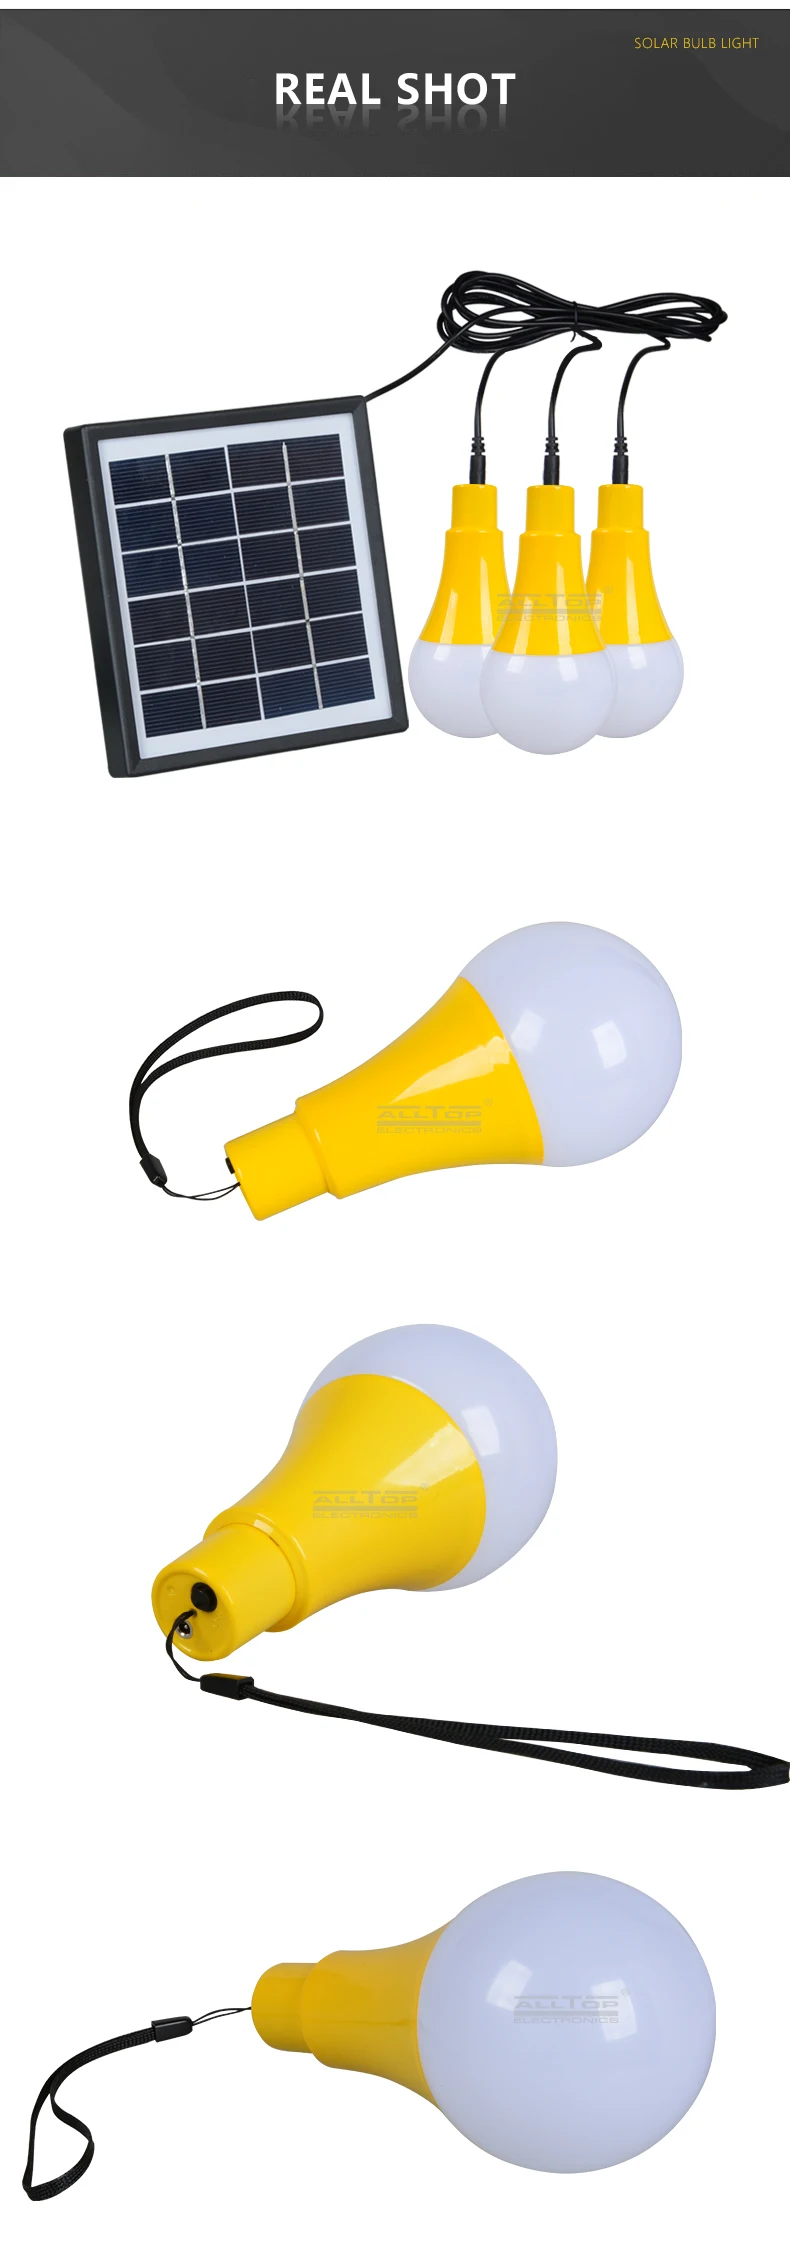 ALLTOP Rechargeable Solar Portable Lamp Solar Home Bulbs Solar Led Emergency Light